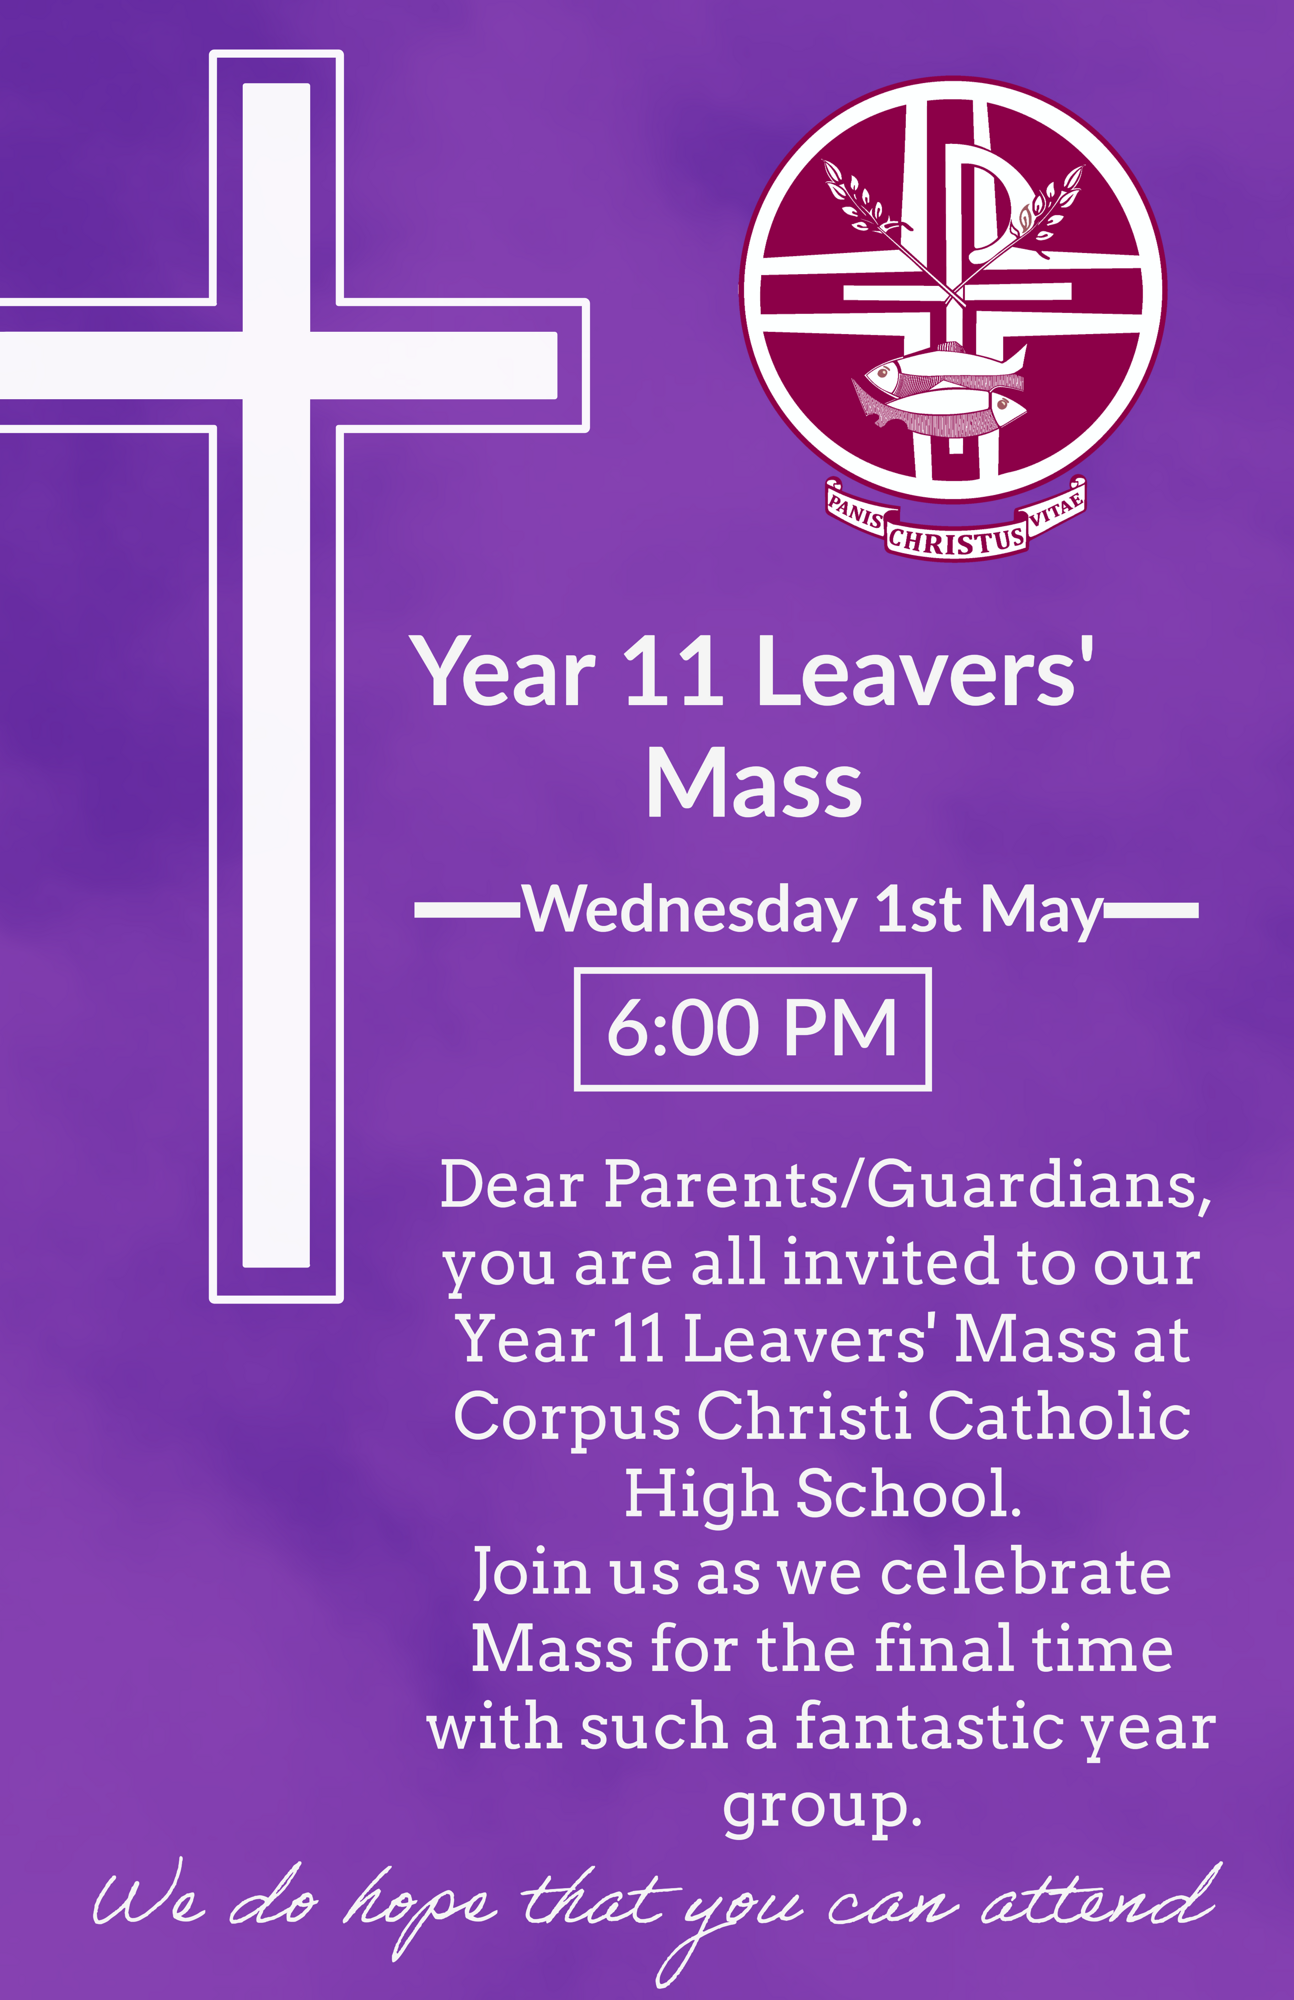 Year 11 Leavers' Mass Invitation